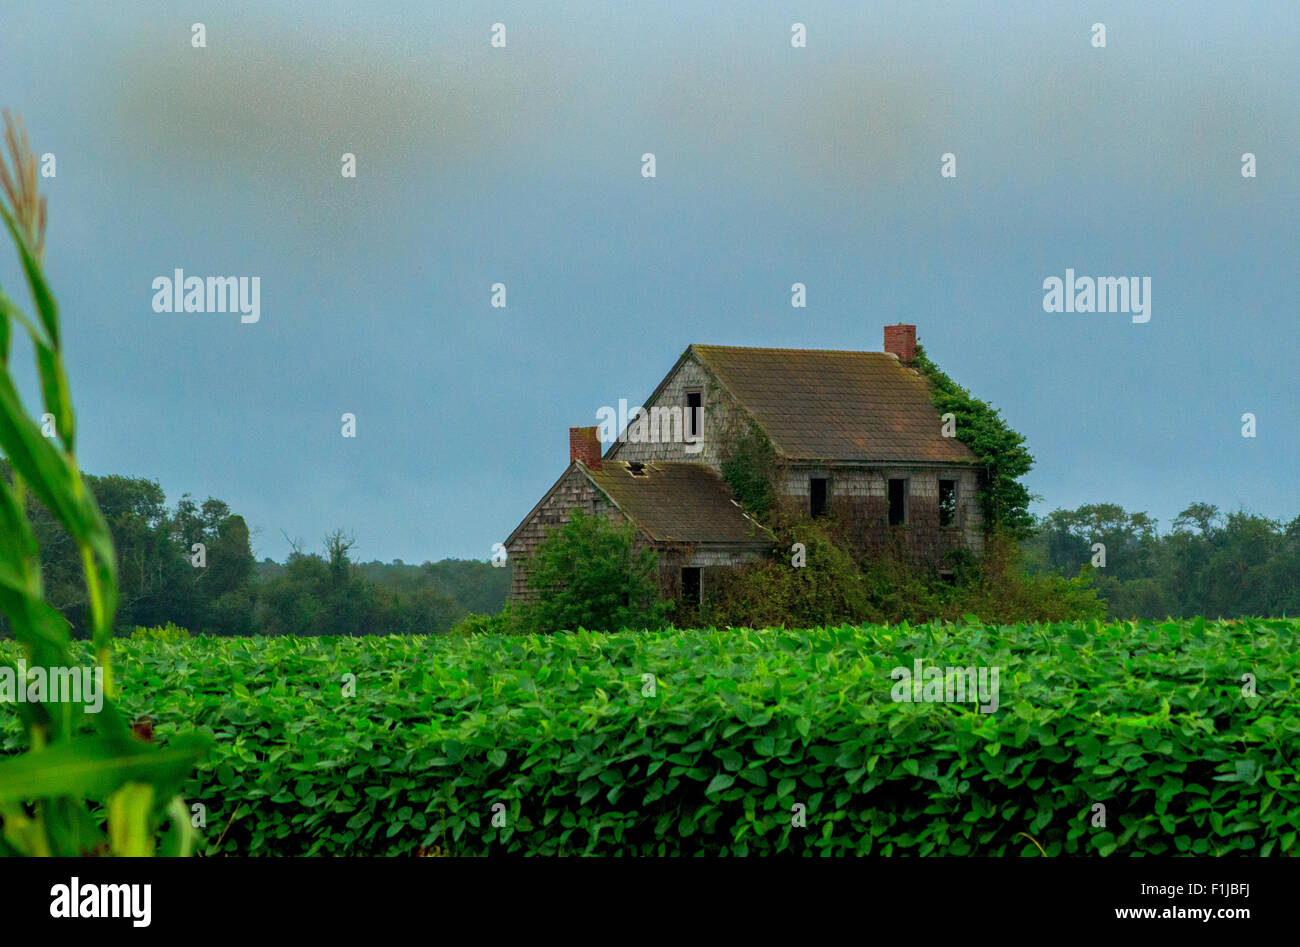 Rainy day Farmhouse overtaken by soybean field Stock Photo